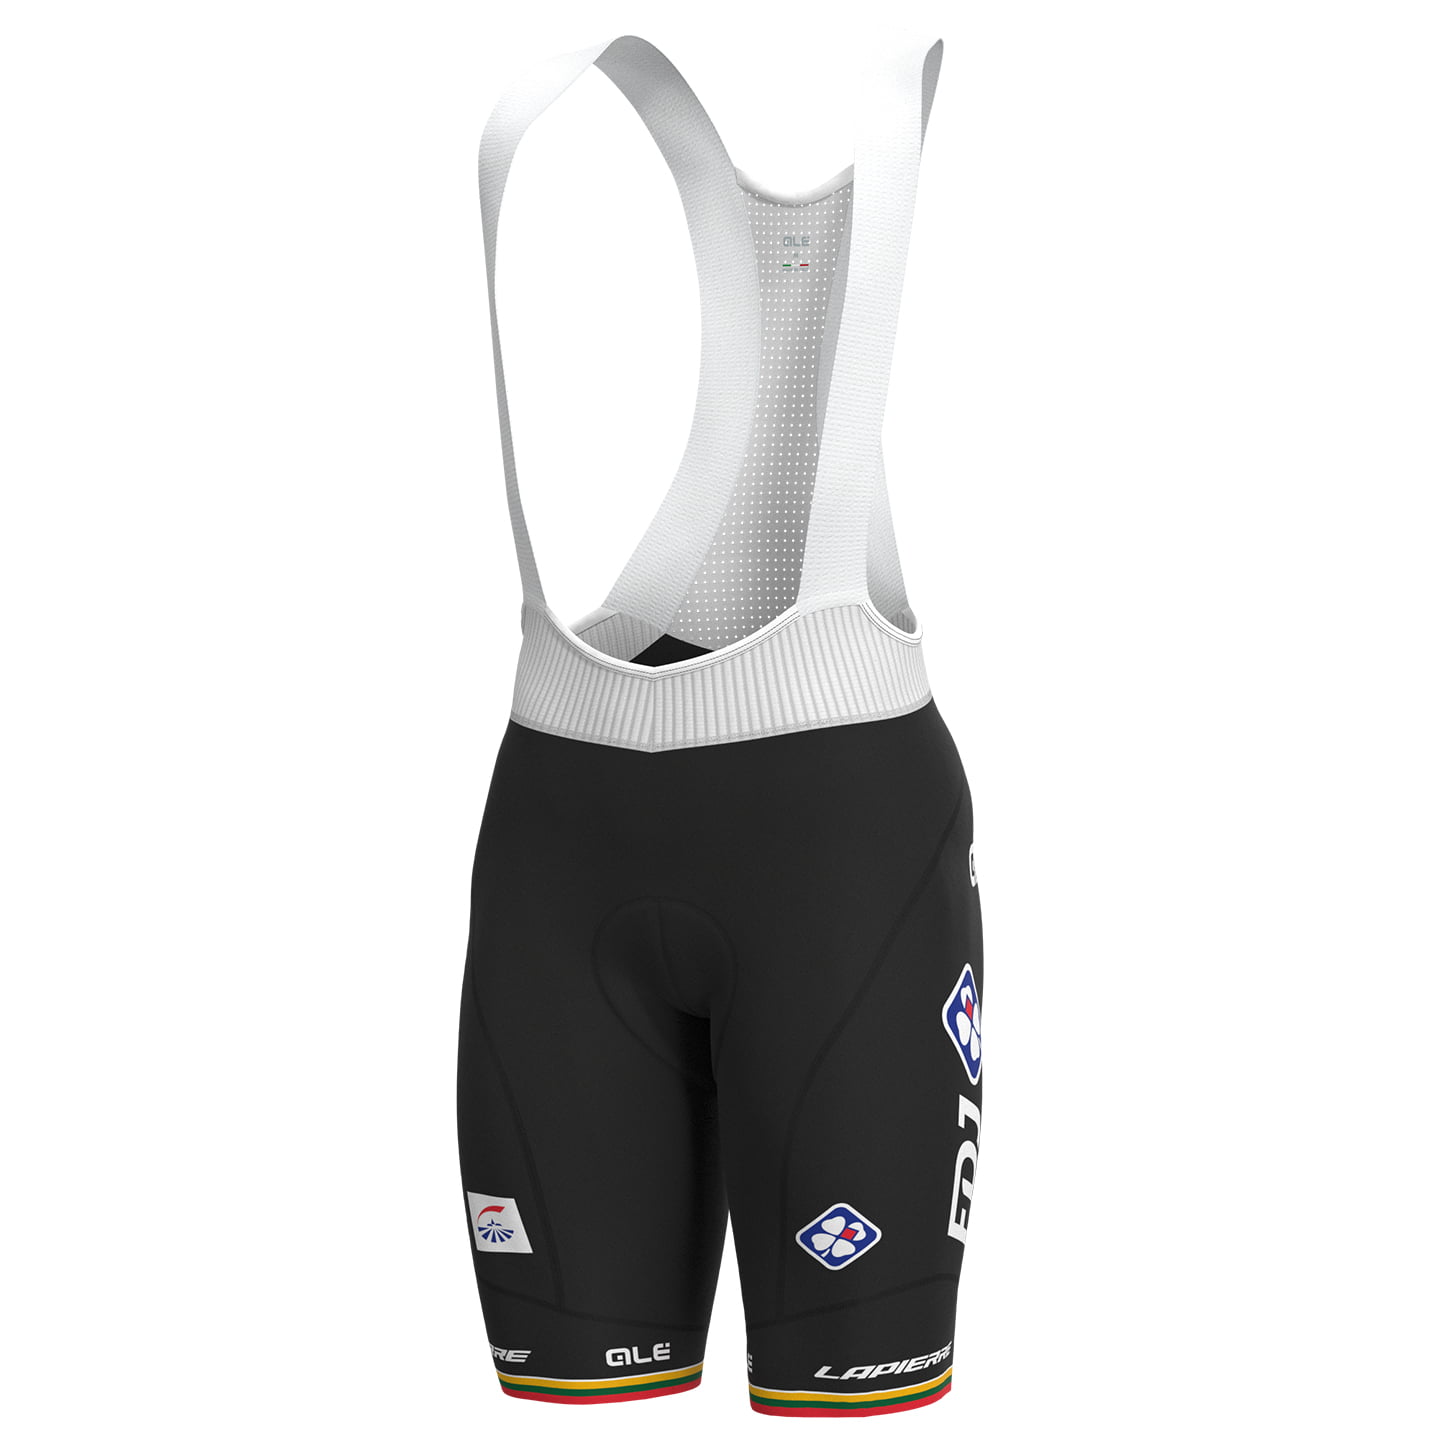 GROUPAMA - FDJ Lithuanian Champion 2022 Bib Shorts, for men, size S, Cycle shorts, Cycling clothing